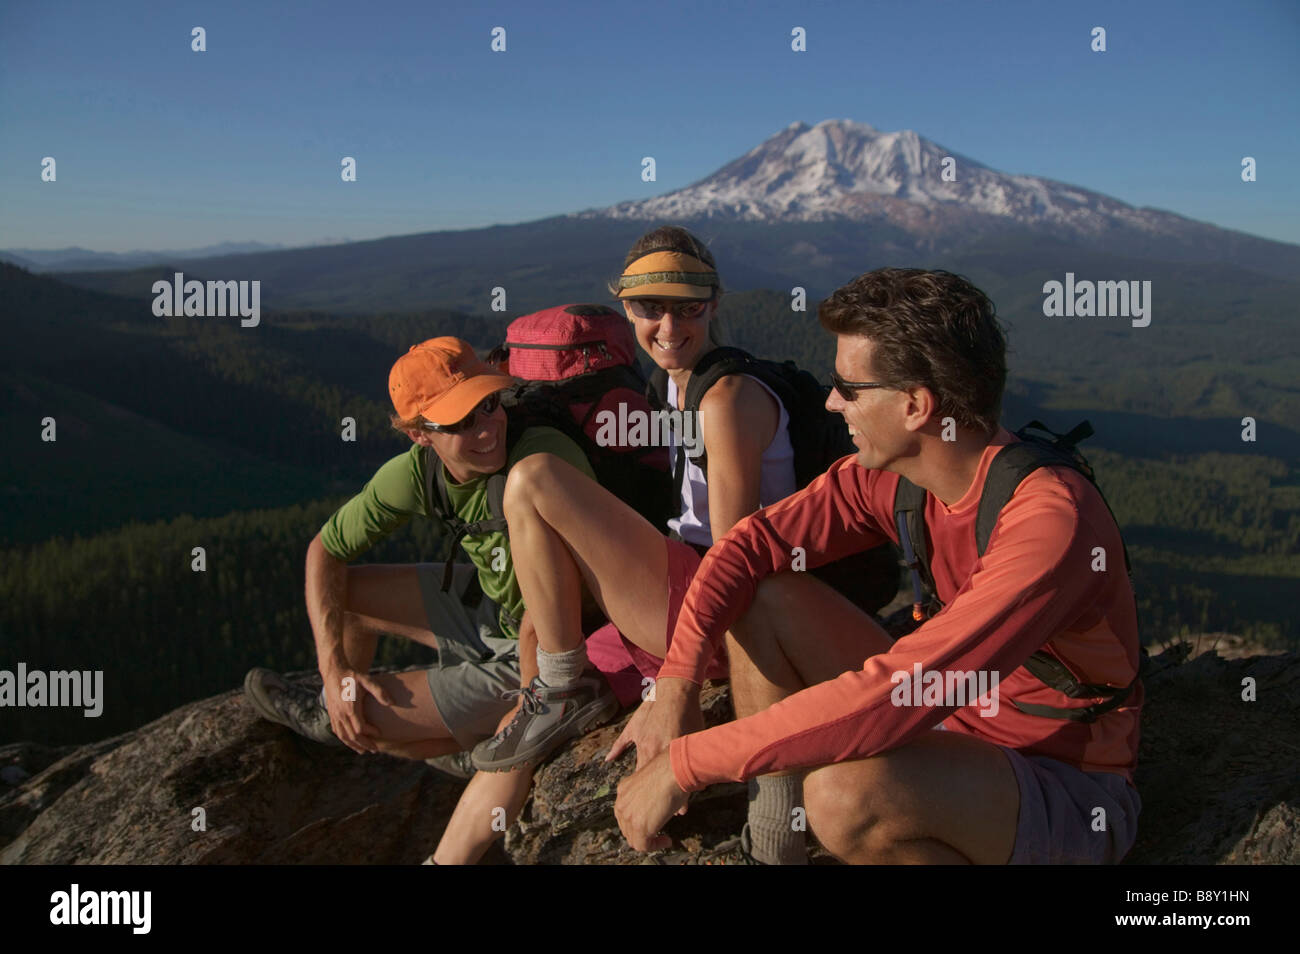 Three hikers on a mountain summit, Mt Adams, Washington State, USA Stock Photo